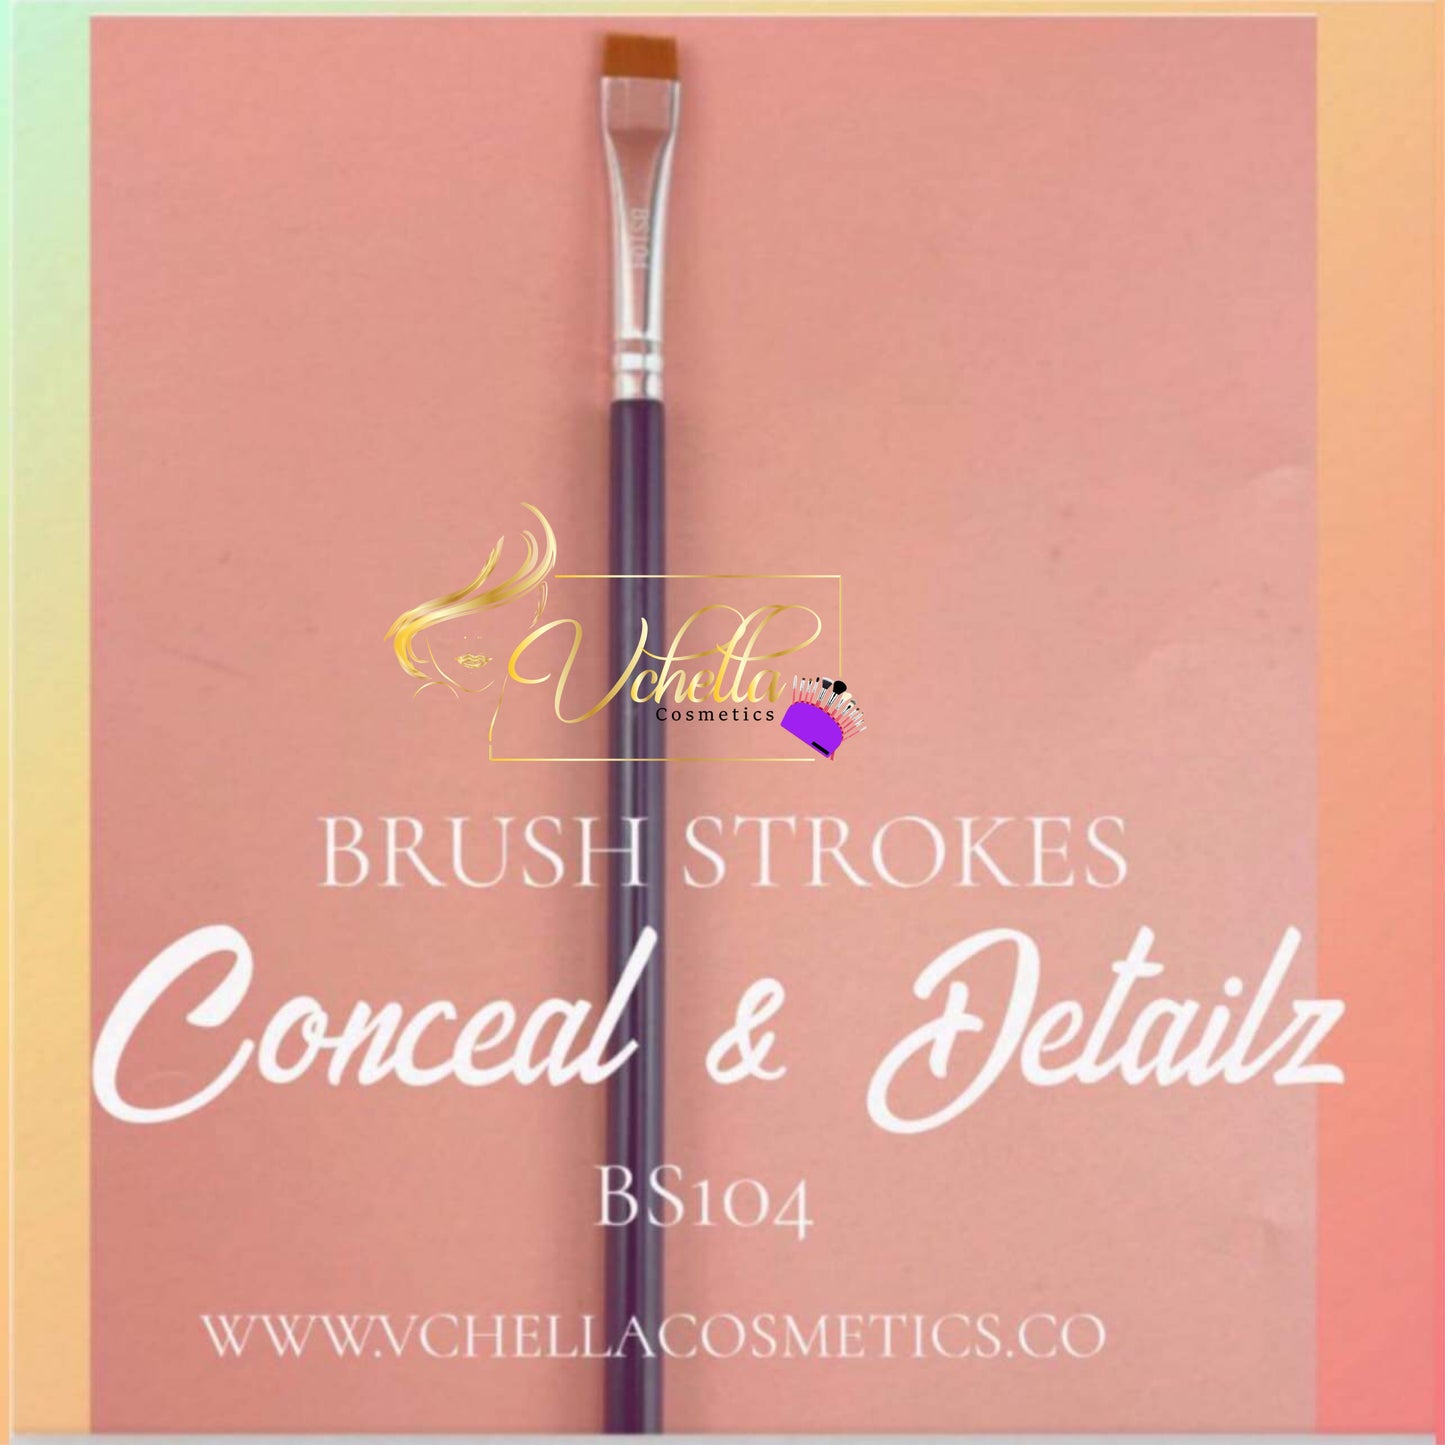 Brush Strokes Conceal & Detailz Set